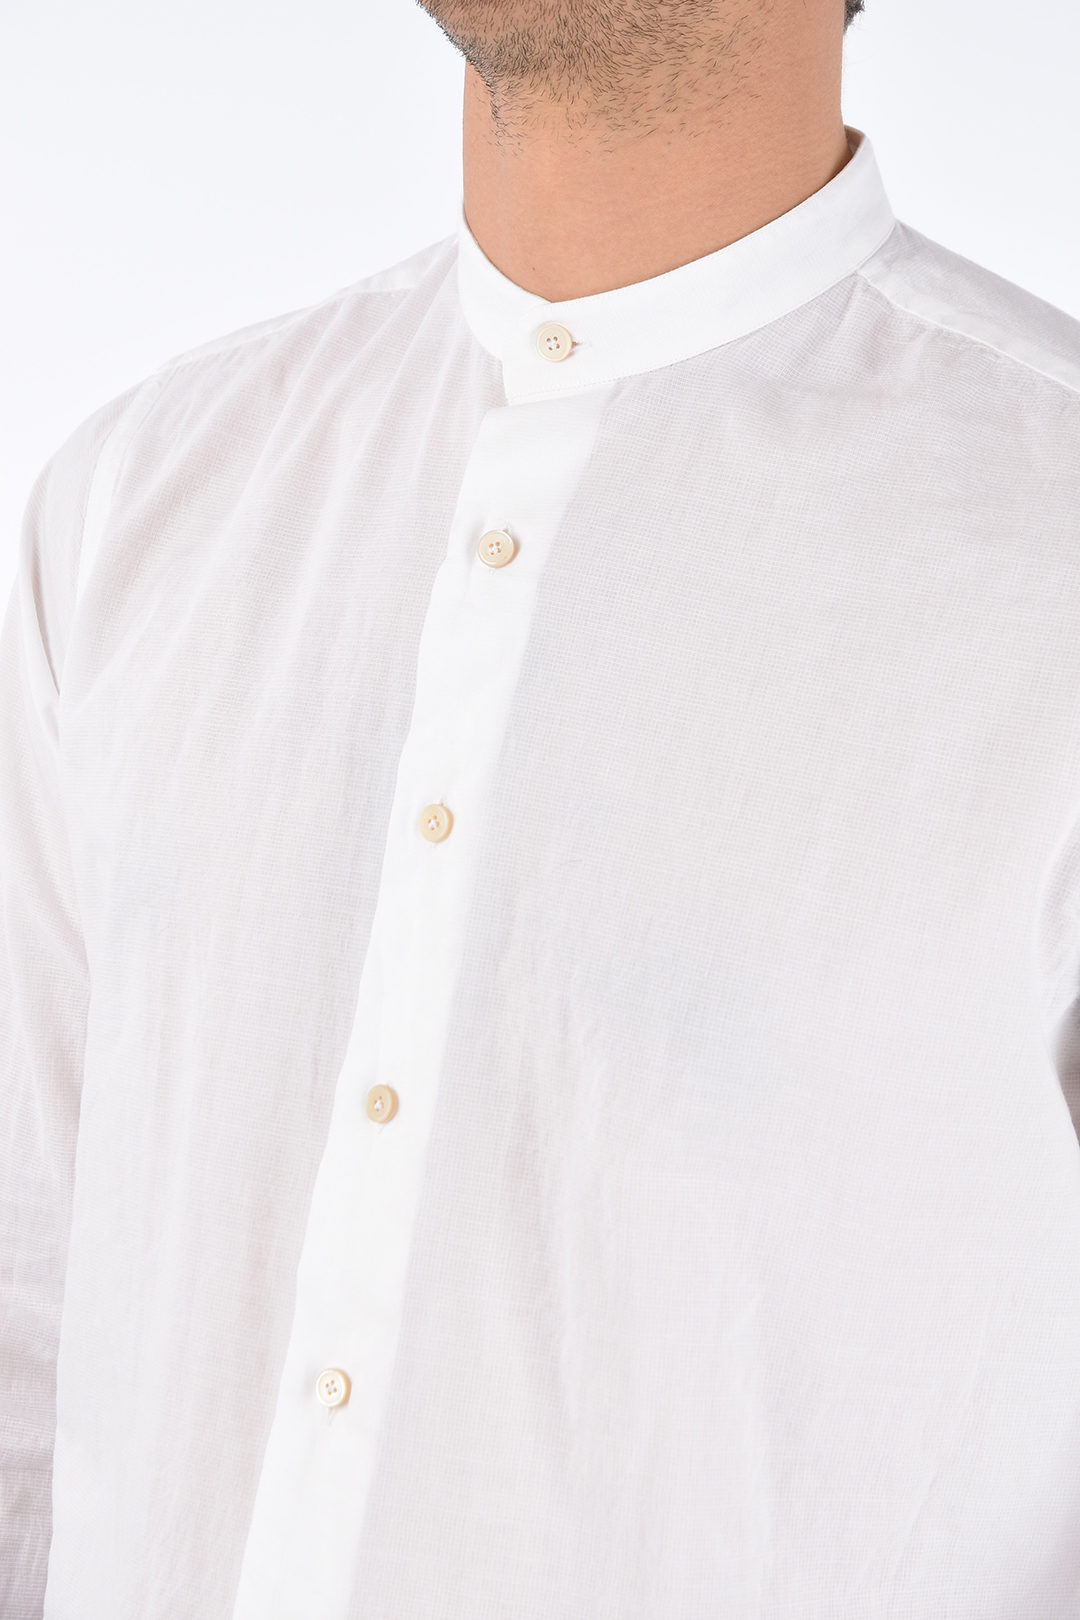 Alessandro Gherardi Corean Neck Shirt men - Glamood Outlet